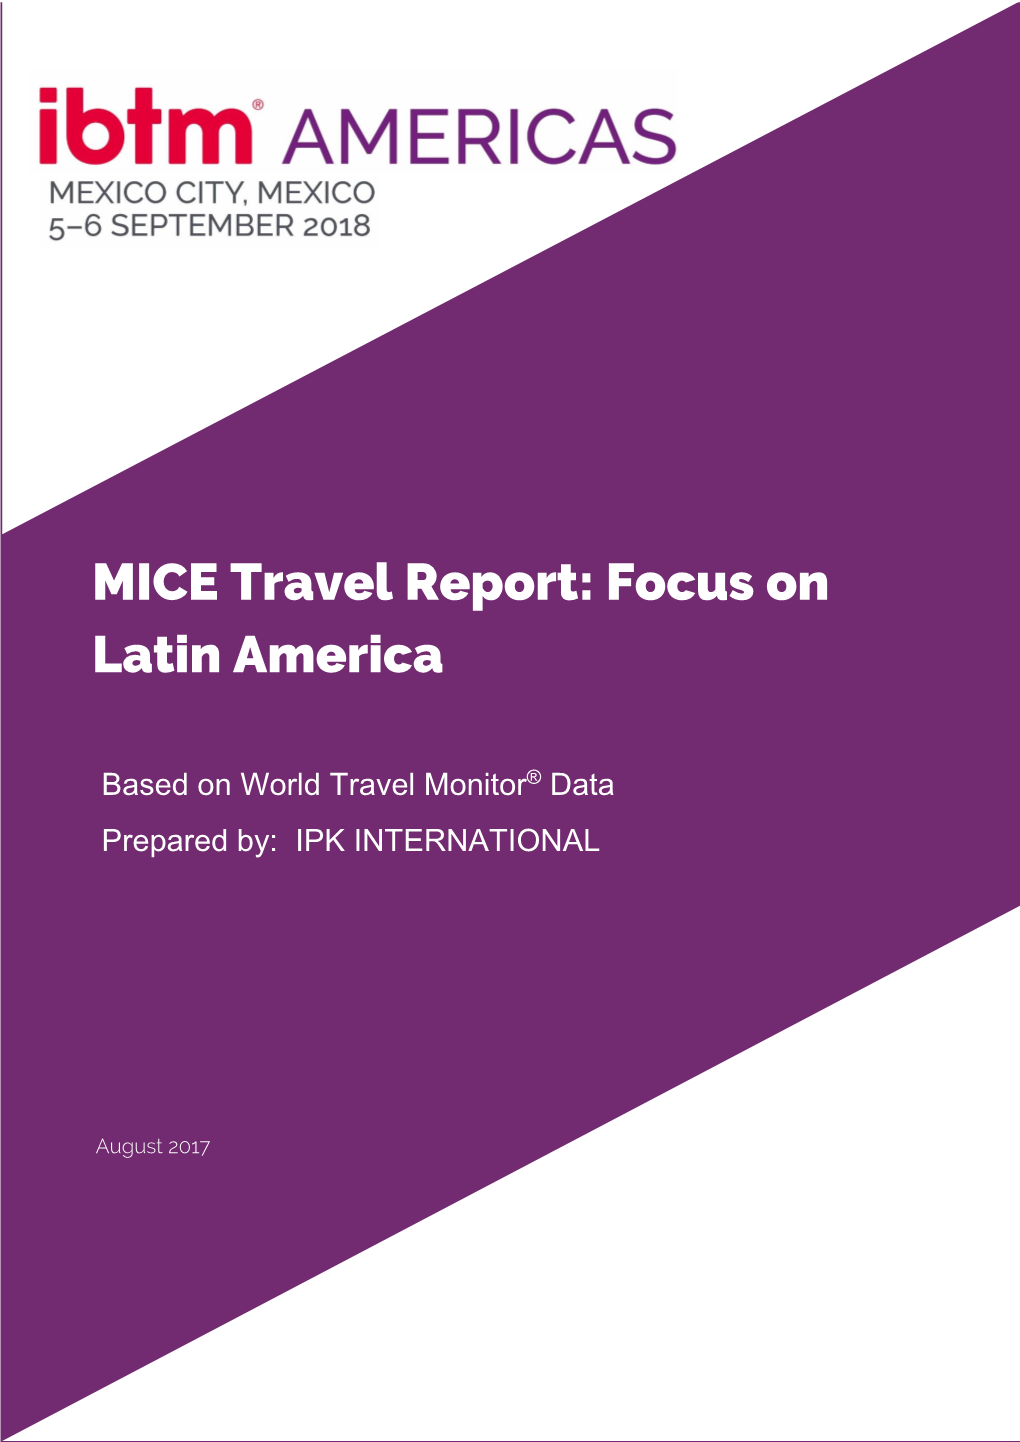 MICE Travel Report: Focus on Latin America